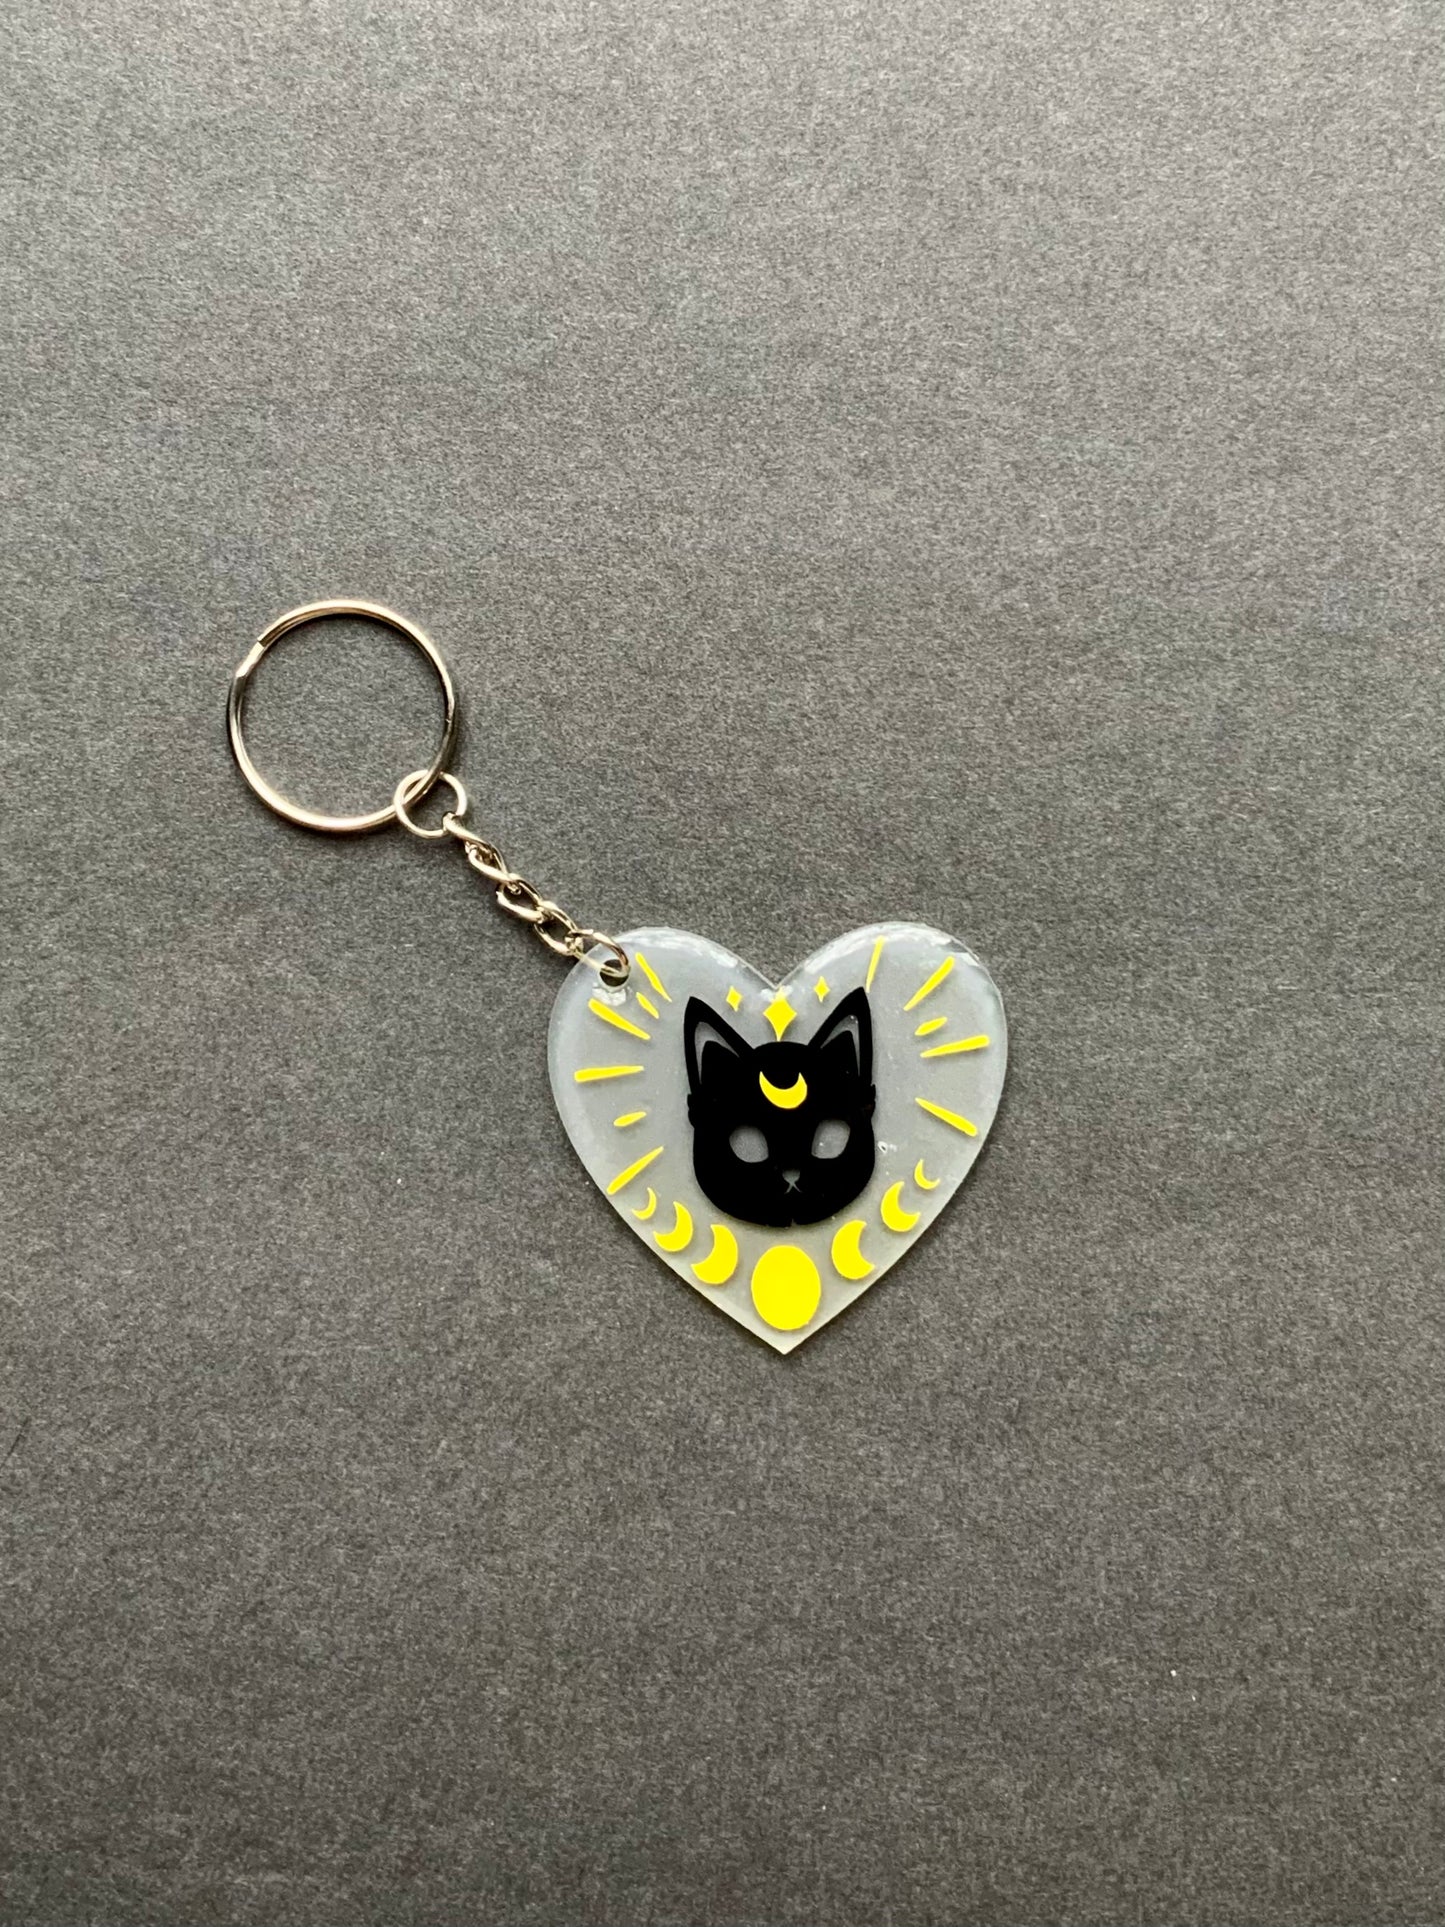 Moon phase Kitty keychain